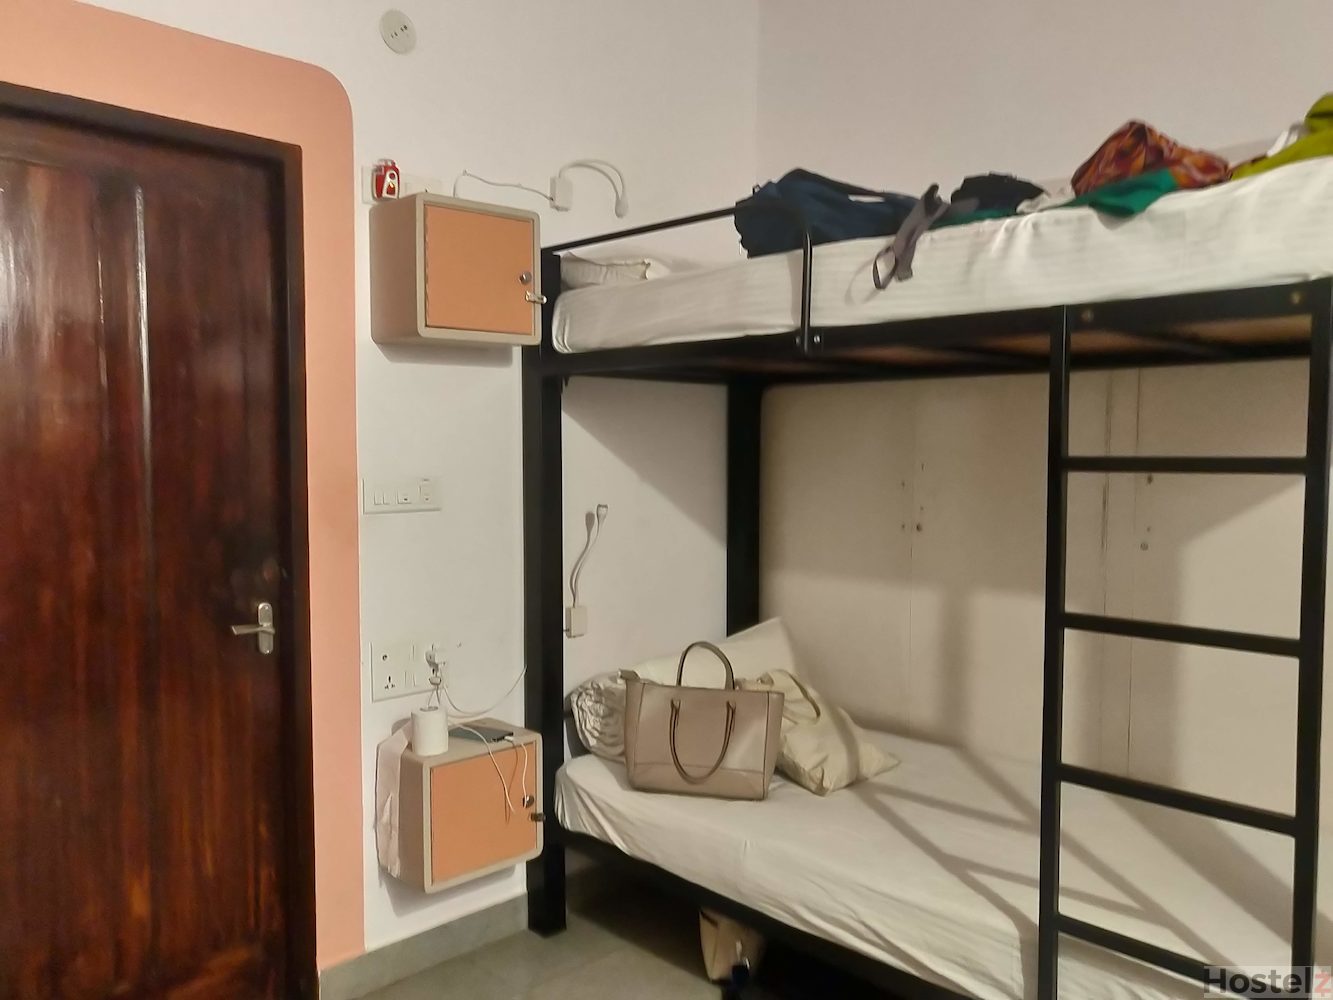 Female 4-bed dorm